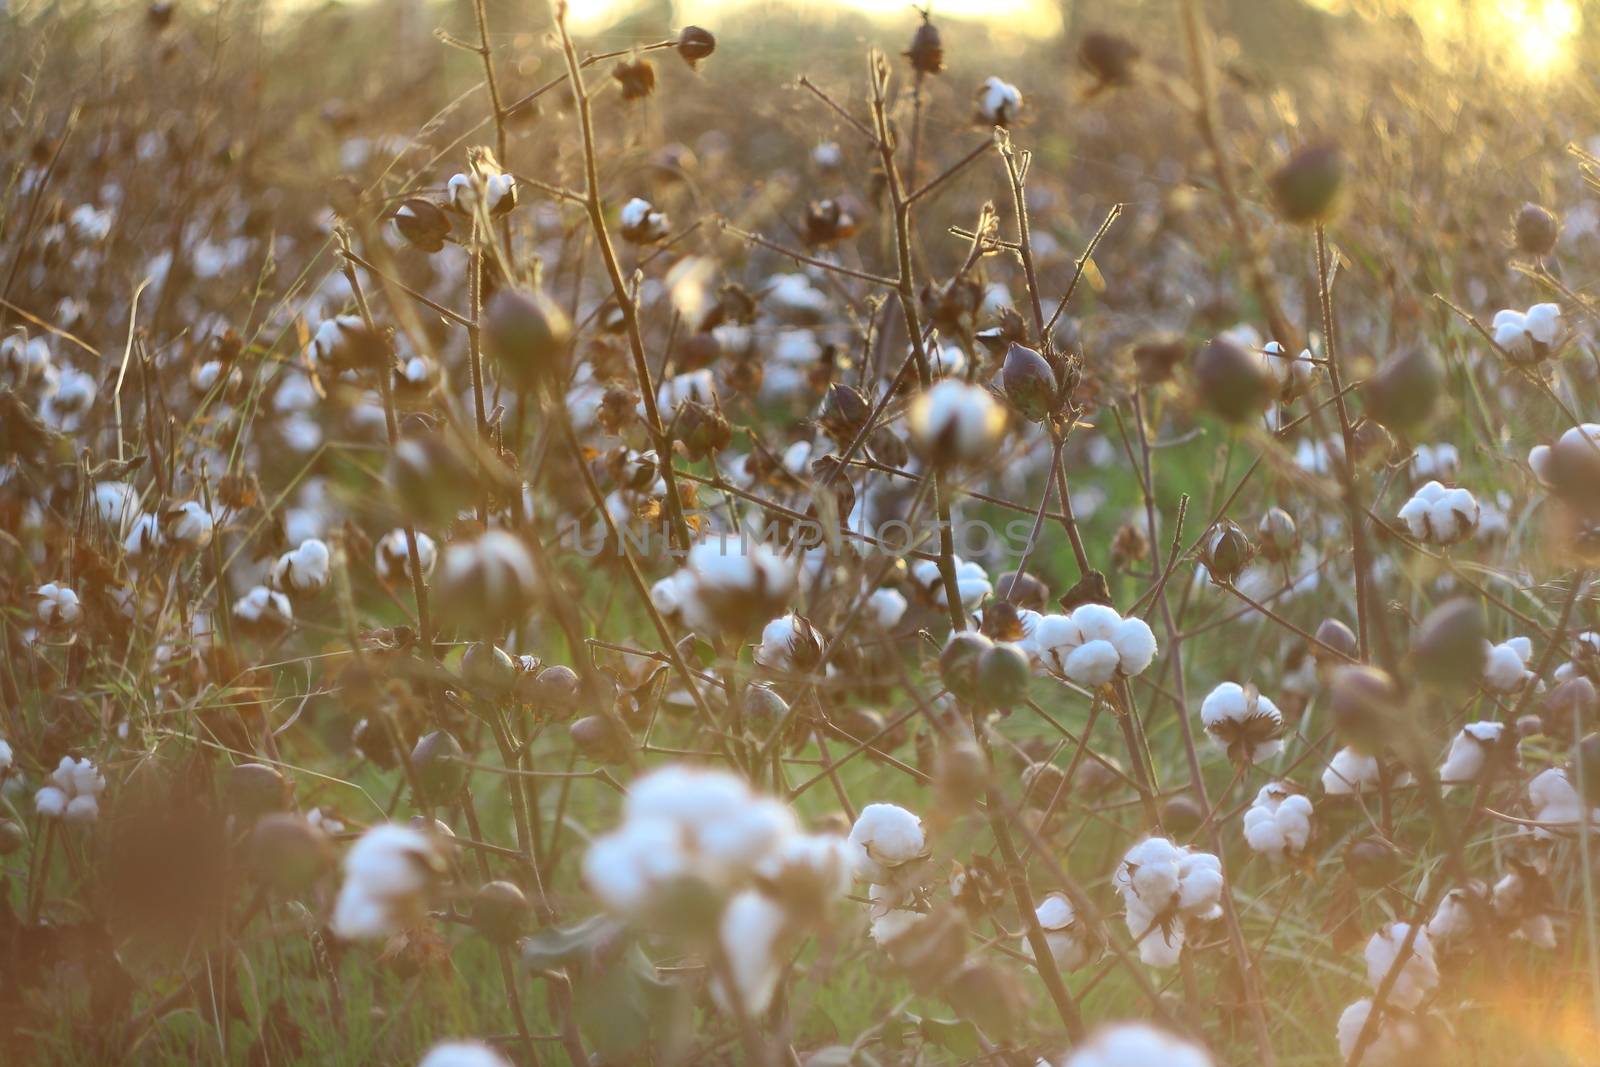 cotton fields at sunset   by mturhanlar